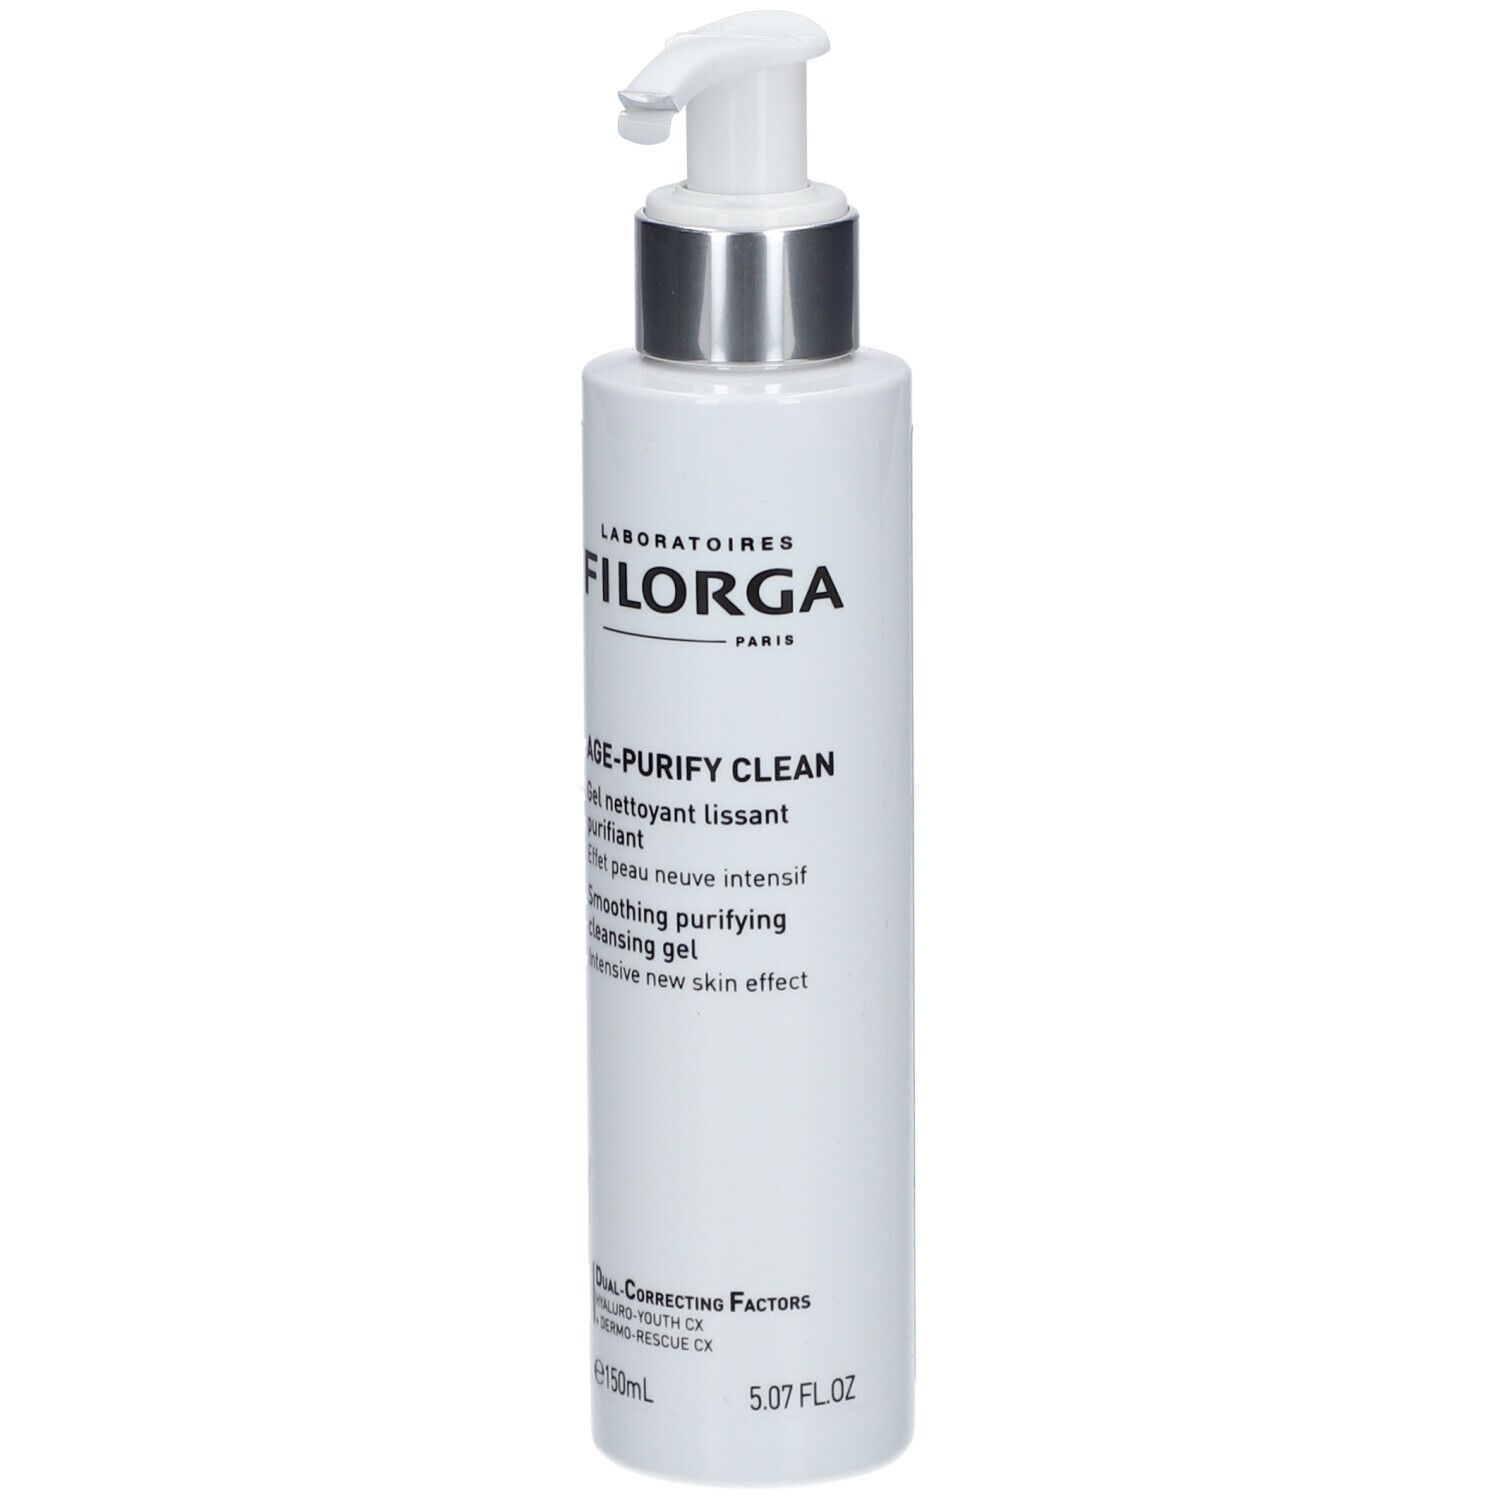 FILORGA Age-purify Clean